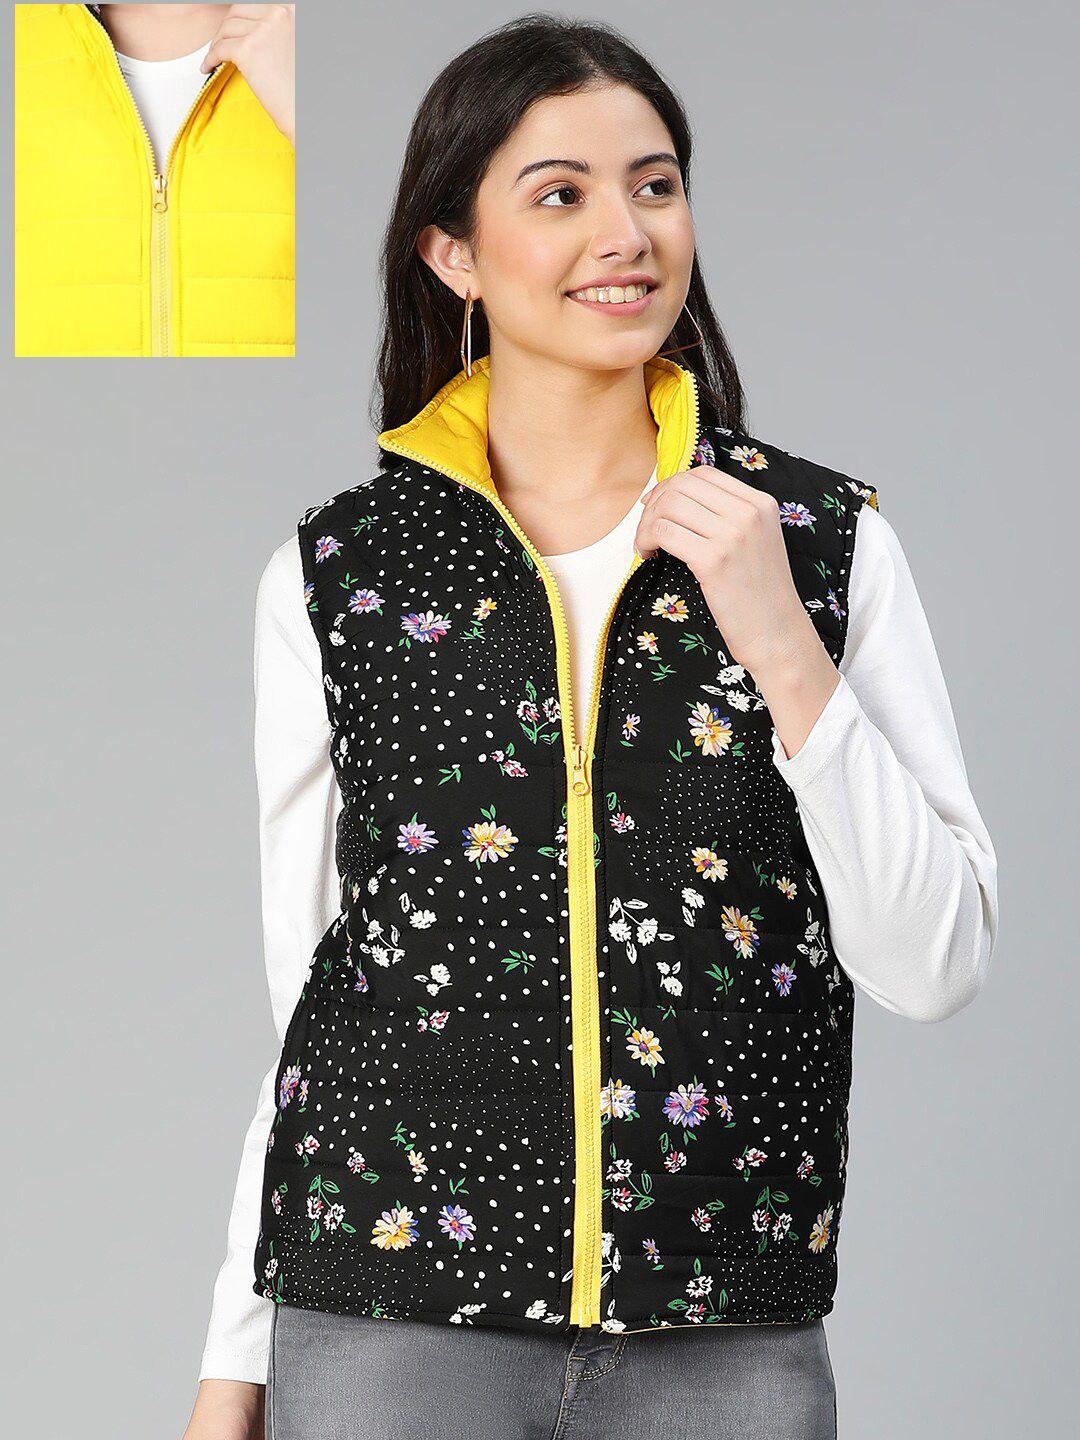 oxolloxo women black yellow floral reversible puffer jacket